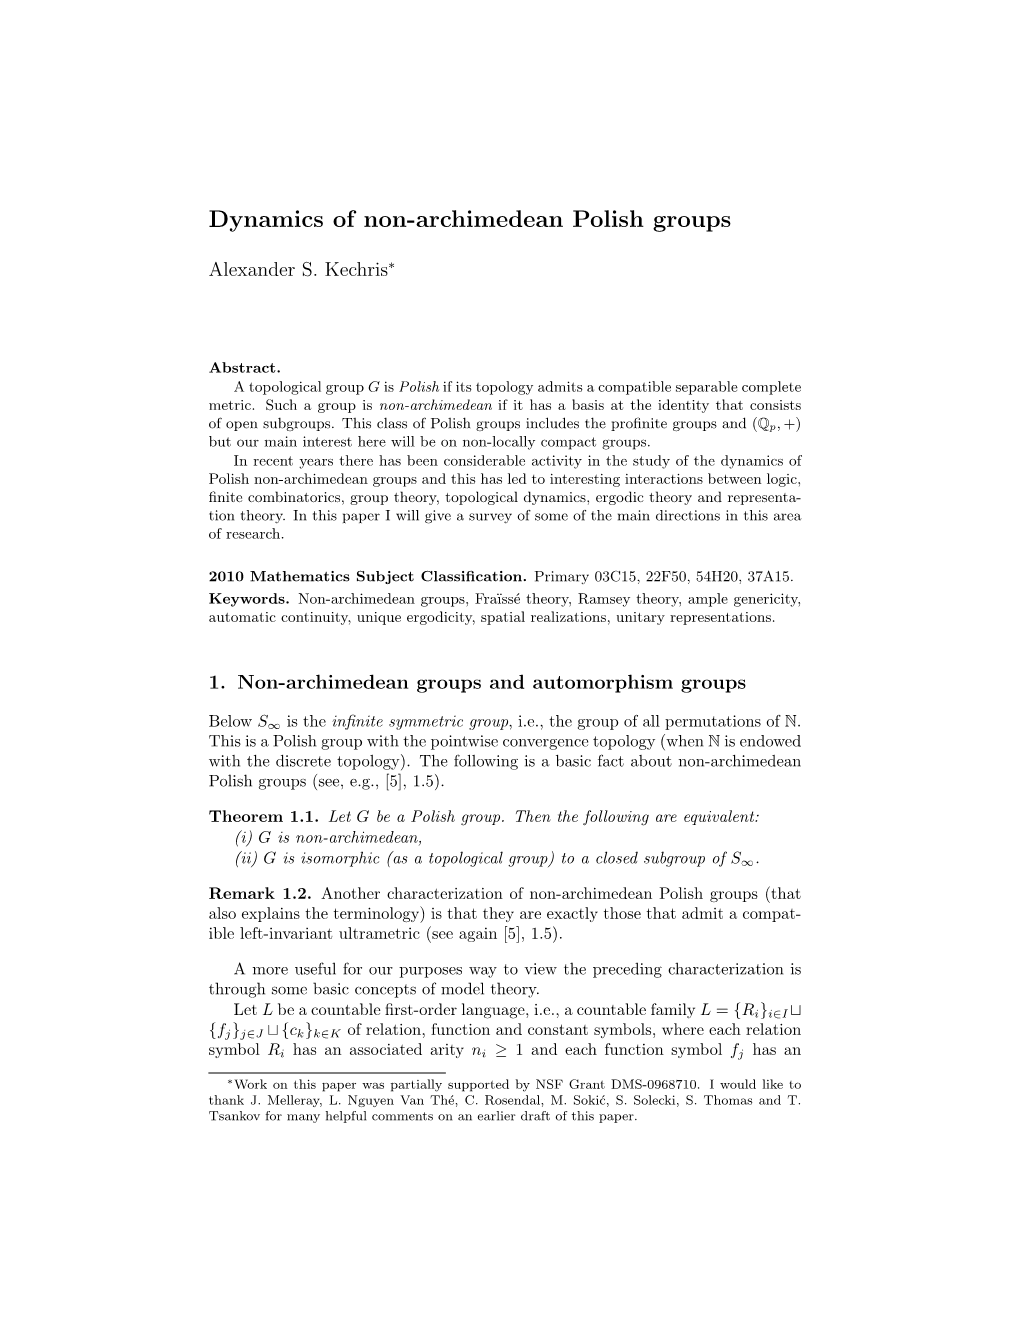 Dynamics of Non-Archimedean Polish Groups